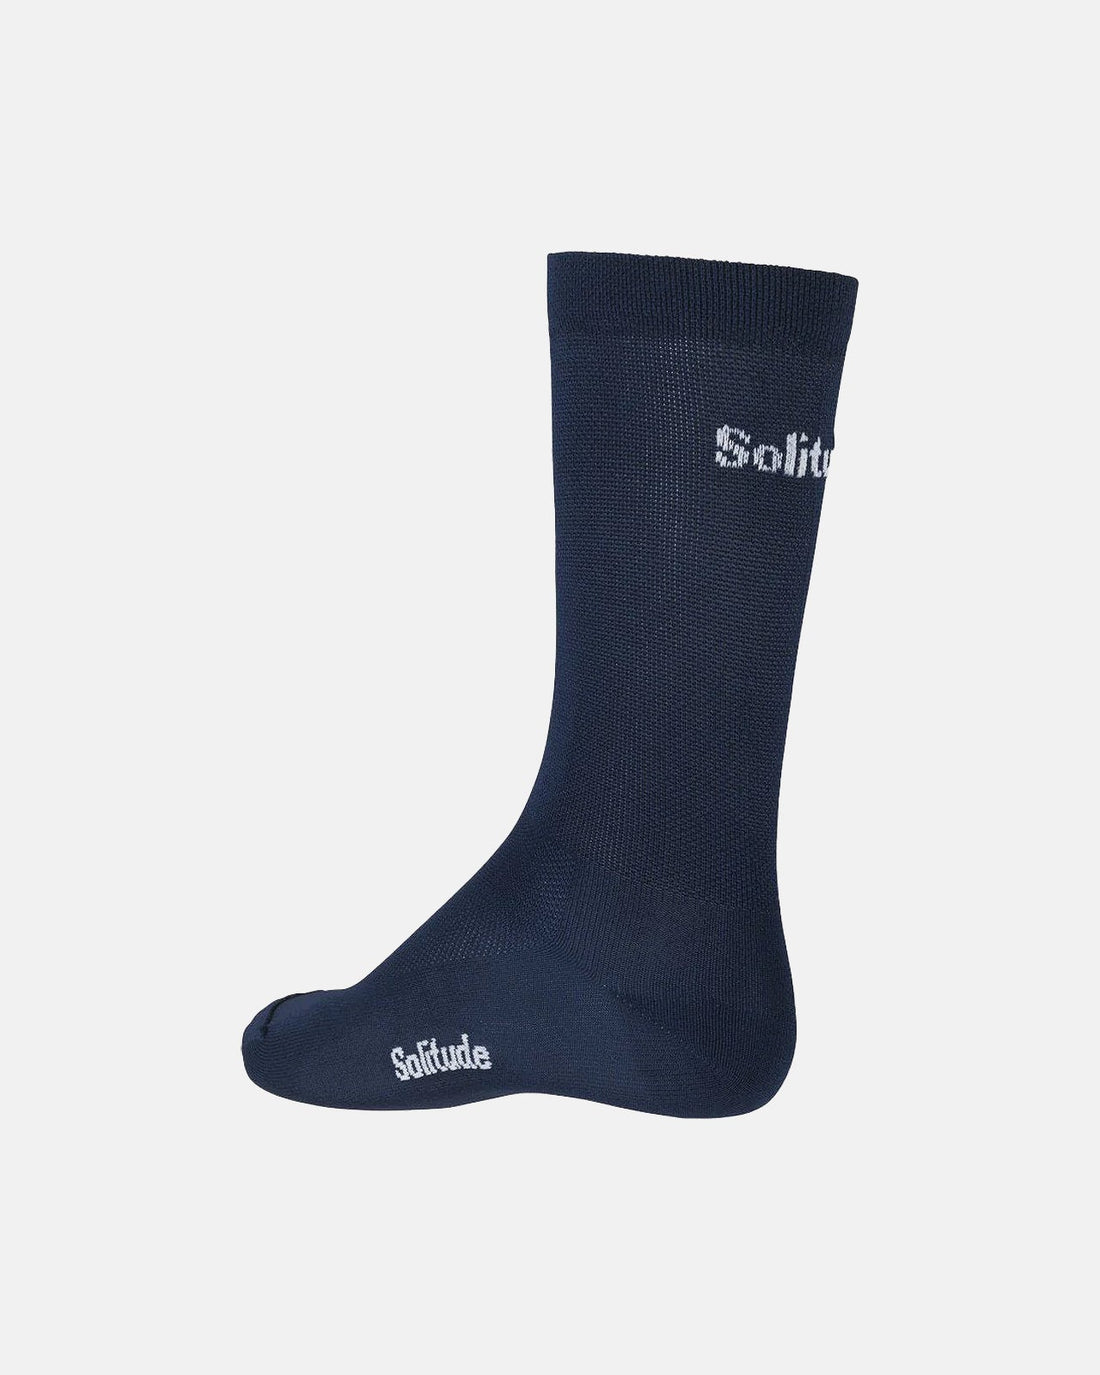 Solitude Socks - Navy - Pas Normal Studios